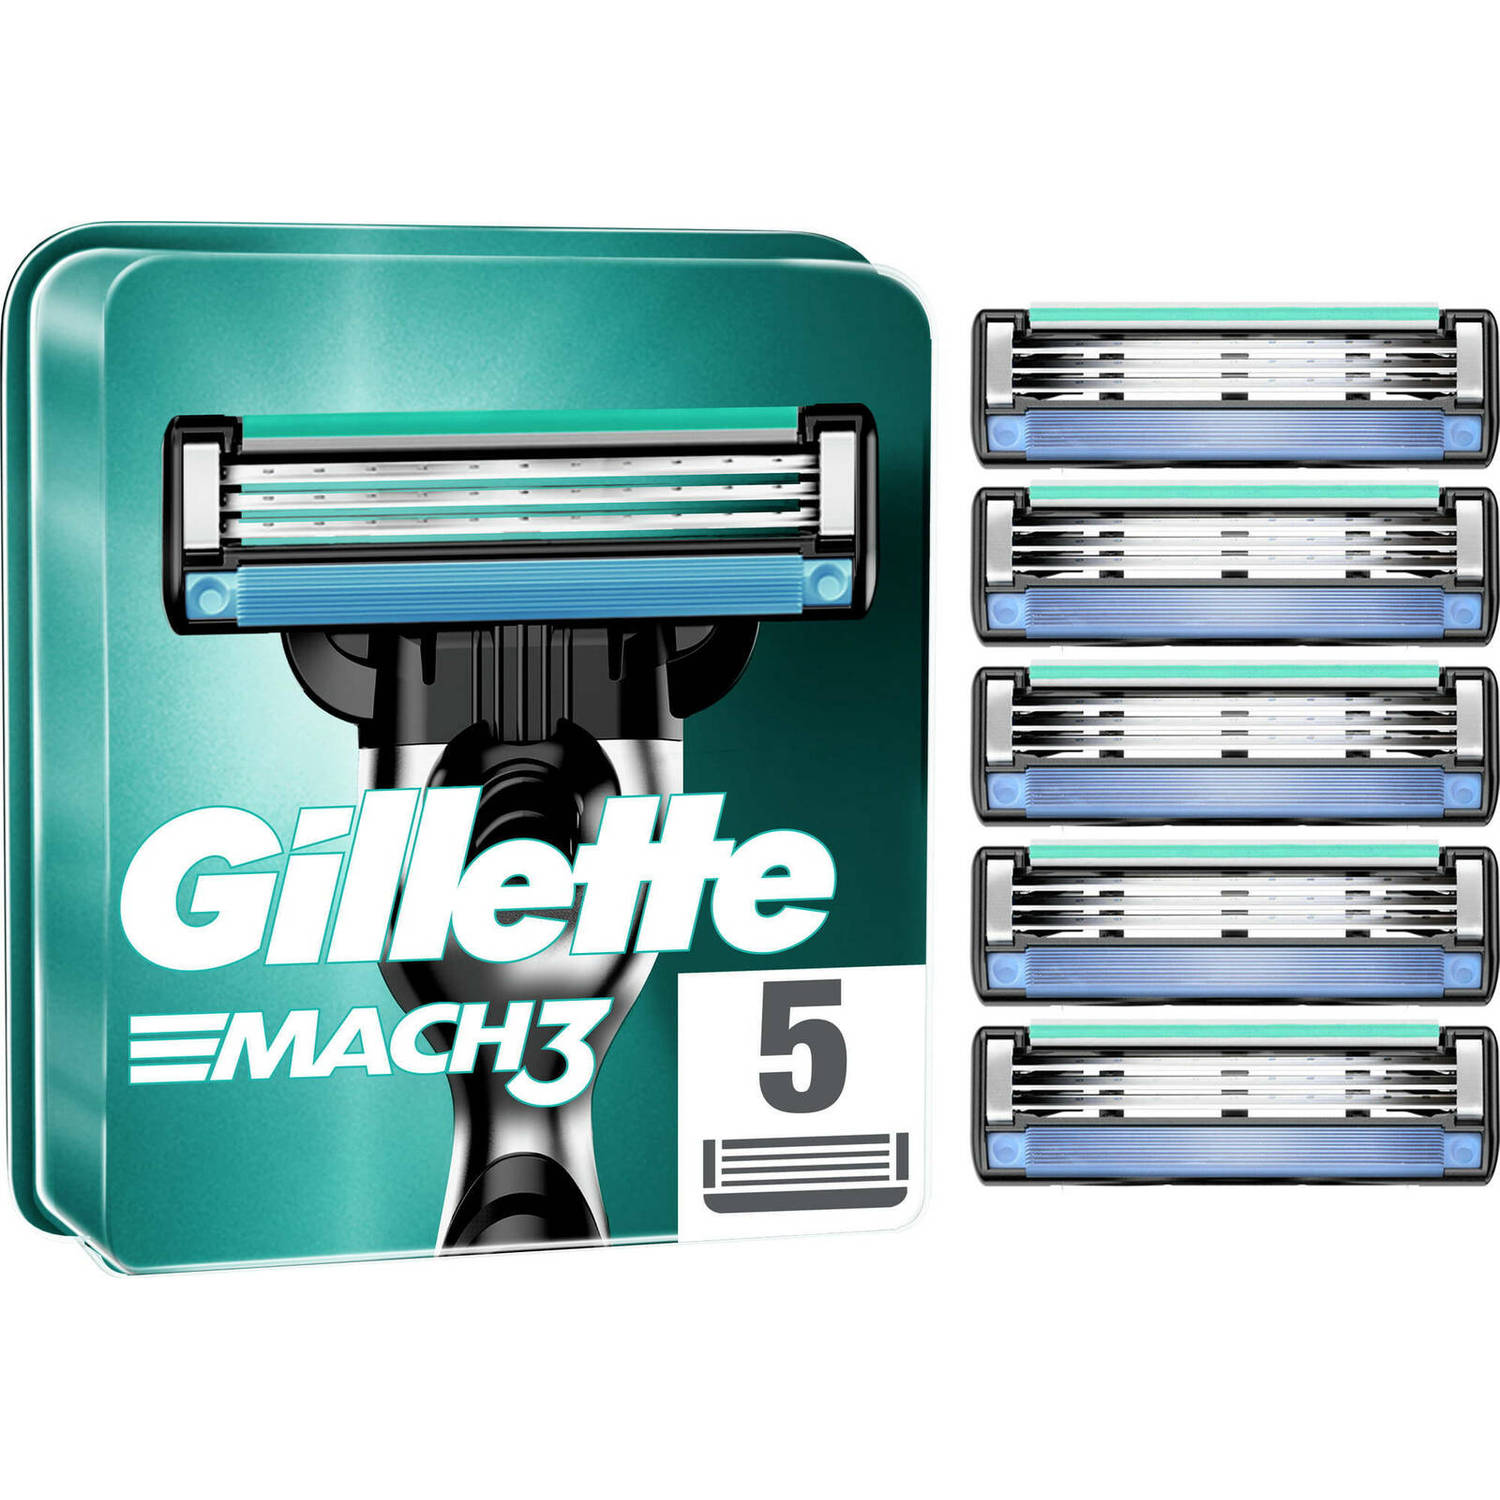 Gillette Mach3 Scheermesjes 5 stuks